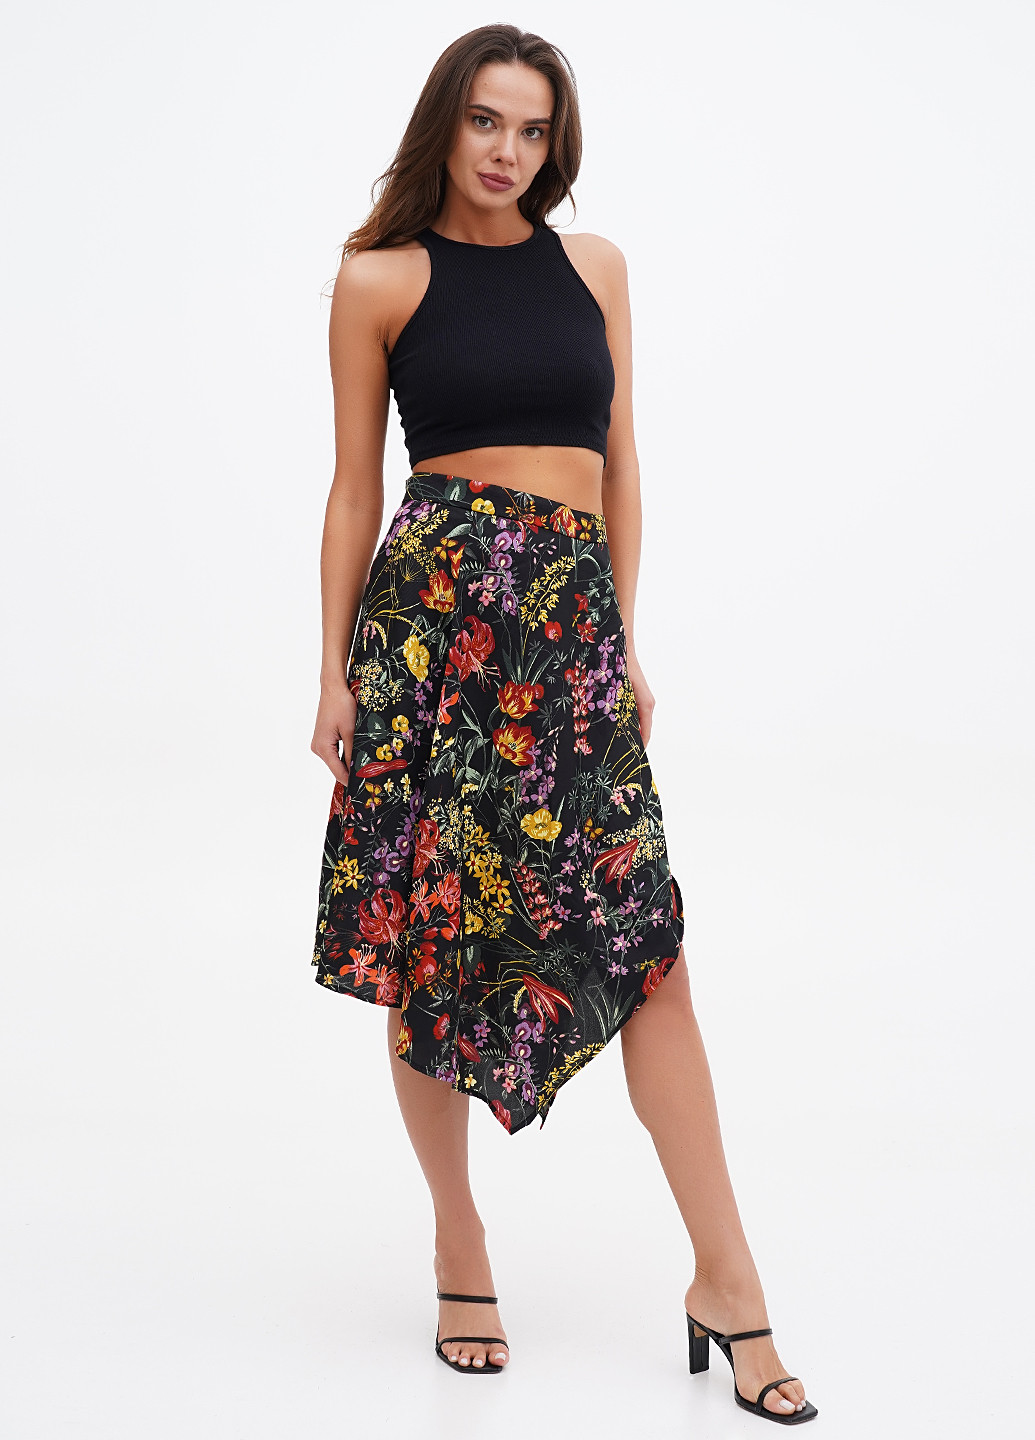 Разноцветная кэжуал цветочной расцветки юбка H&M а-силуэта (трапеция)